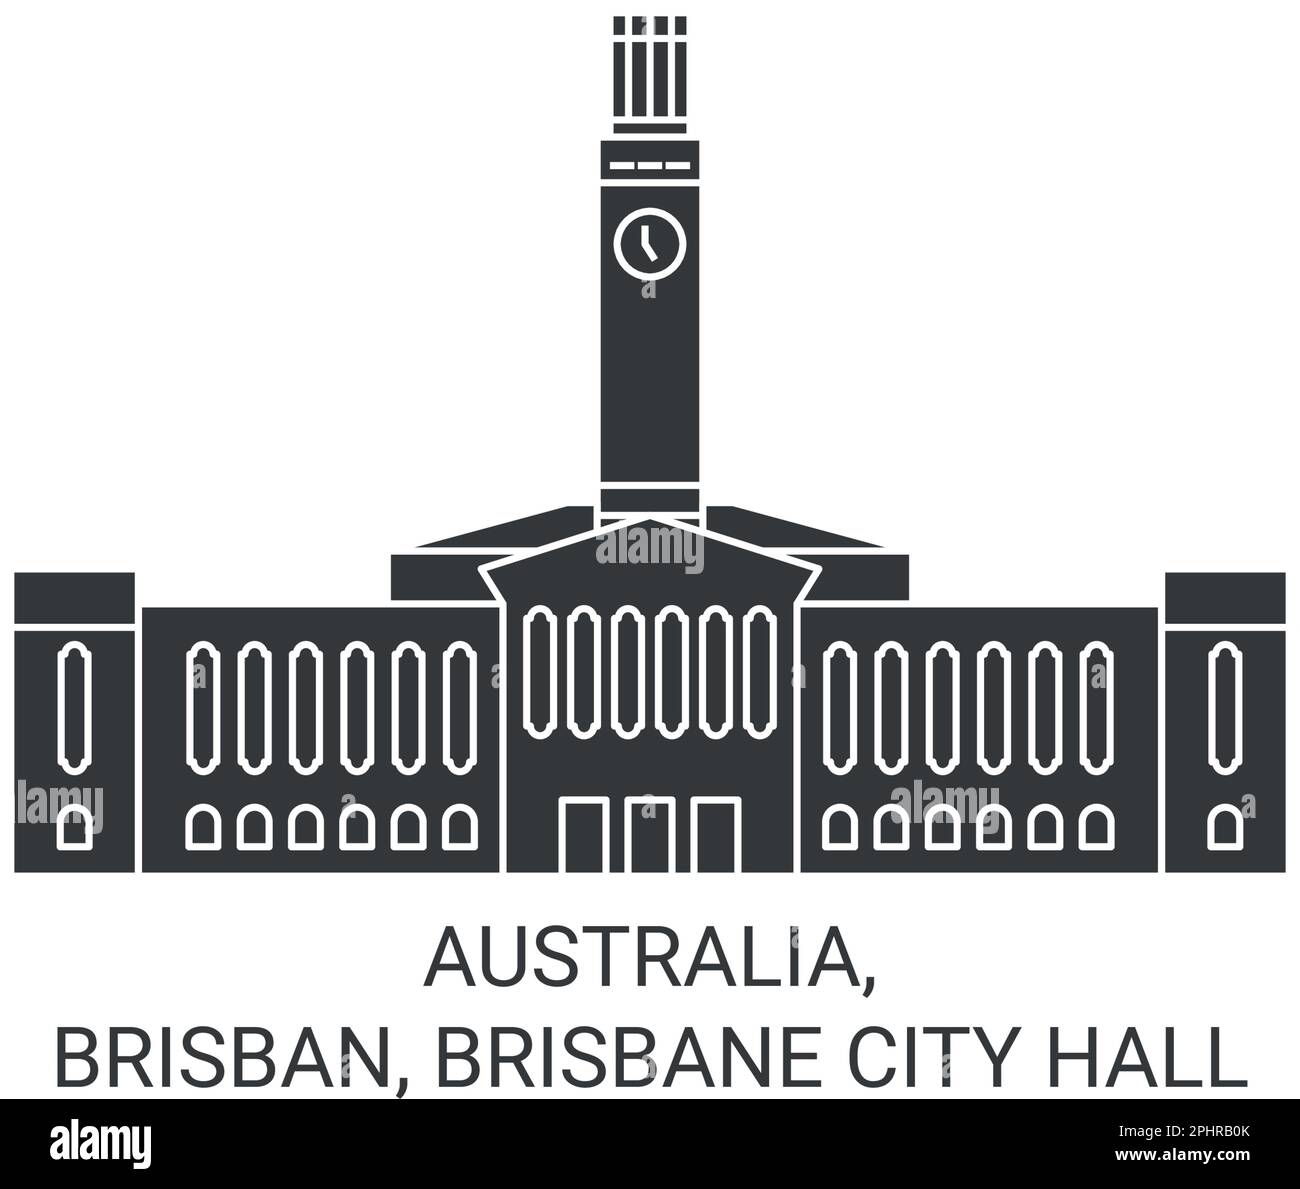 Australia, Brisban, Brisbane City Hall travel landmark vector illustration Stock Vector